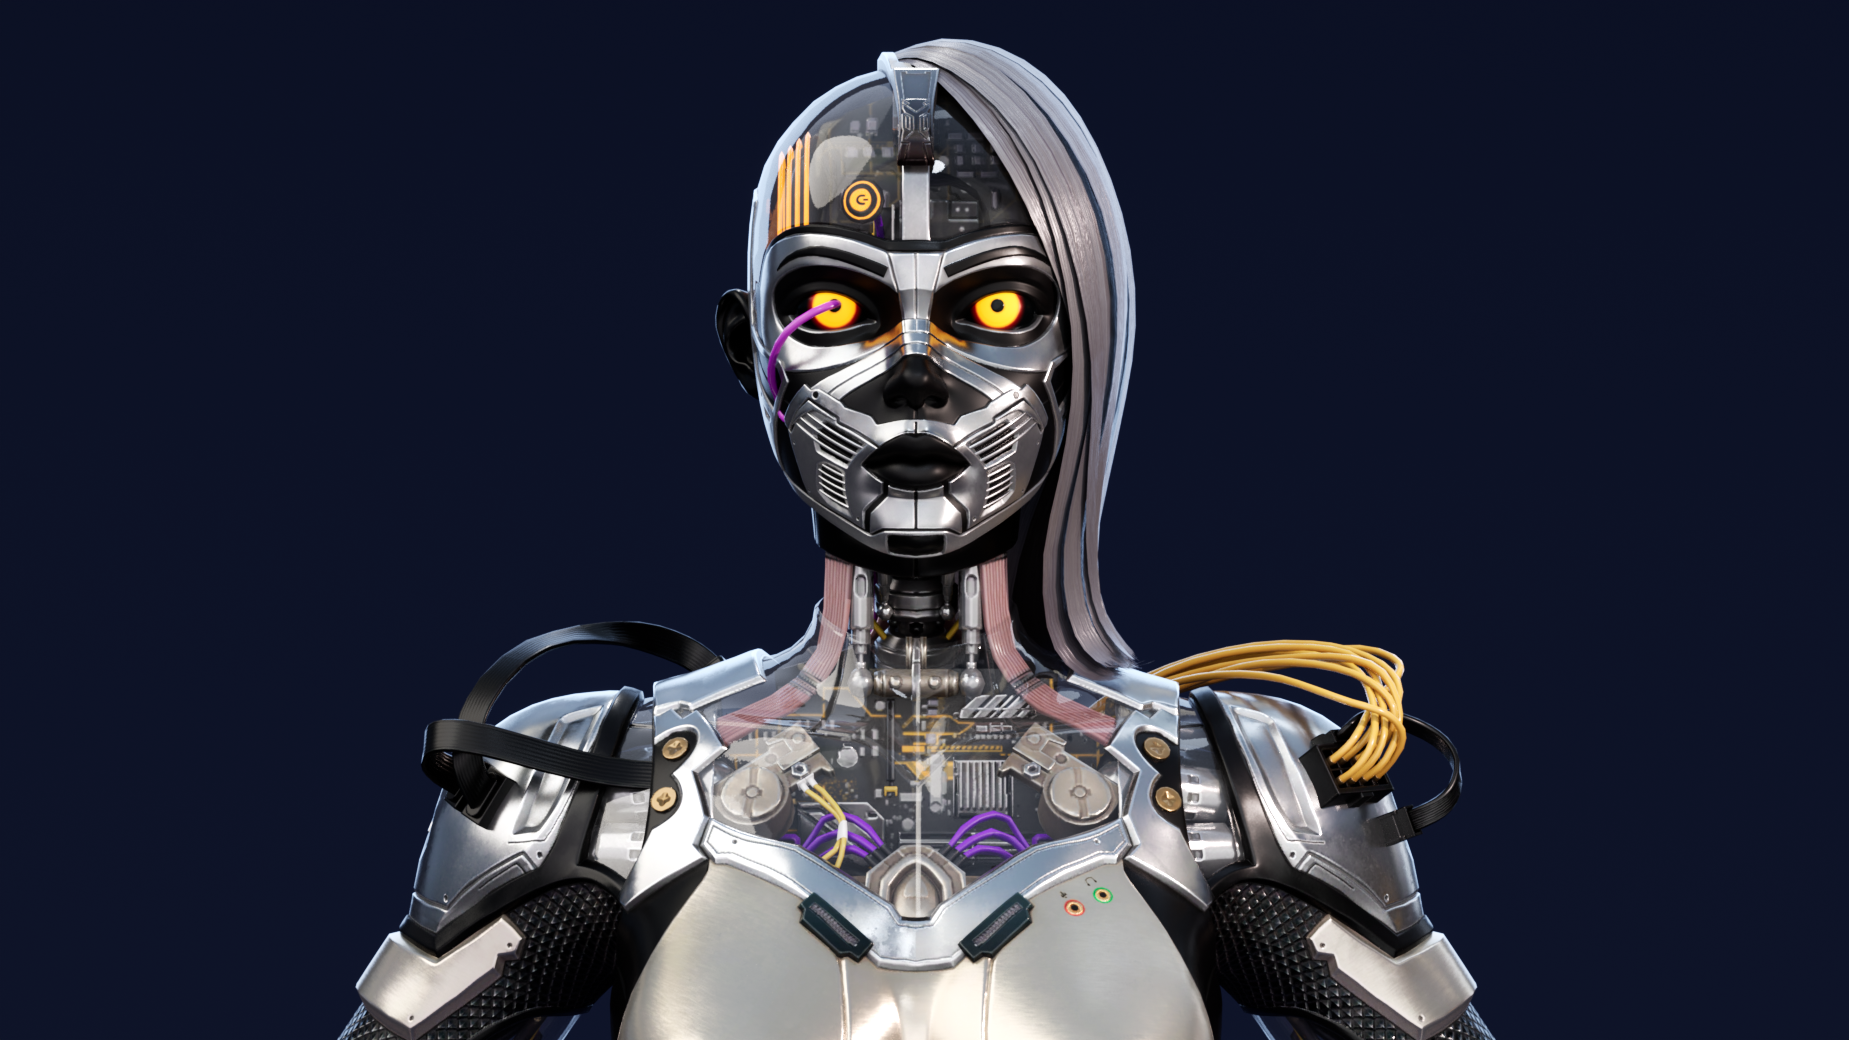 Mirai Robot Cyborg 1849x1040